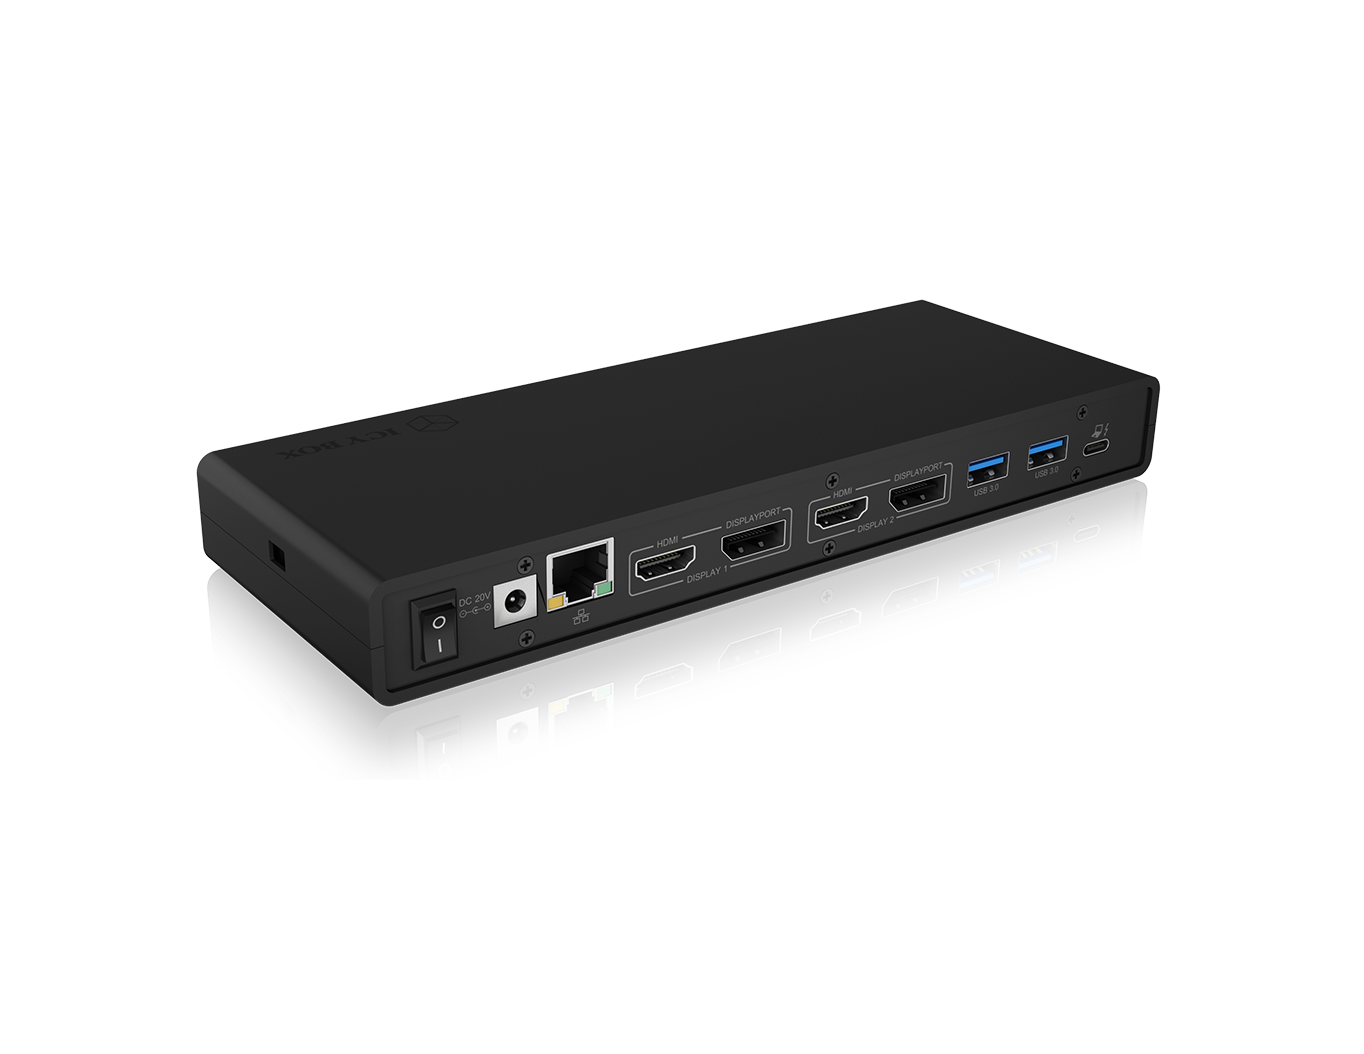 ICY BOX IB-AC6701 - Hub USB - Garantie 3 ans LDLC